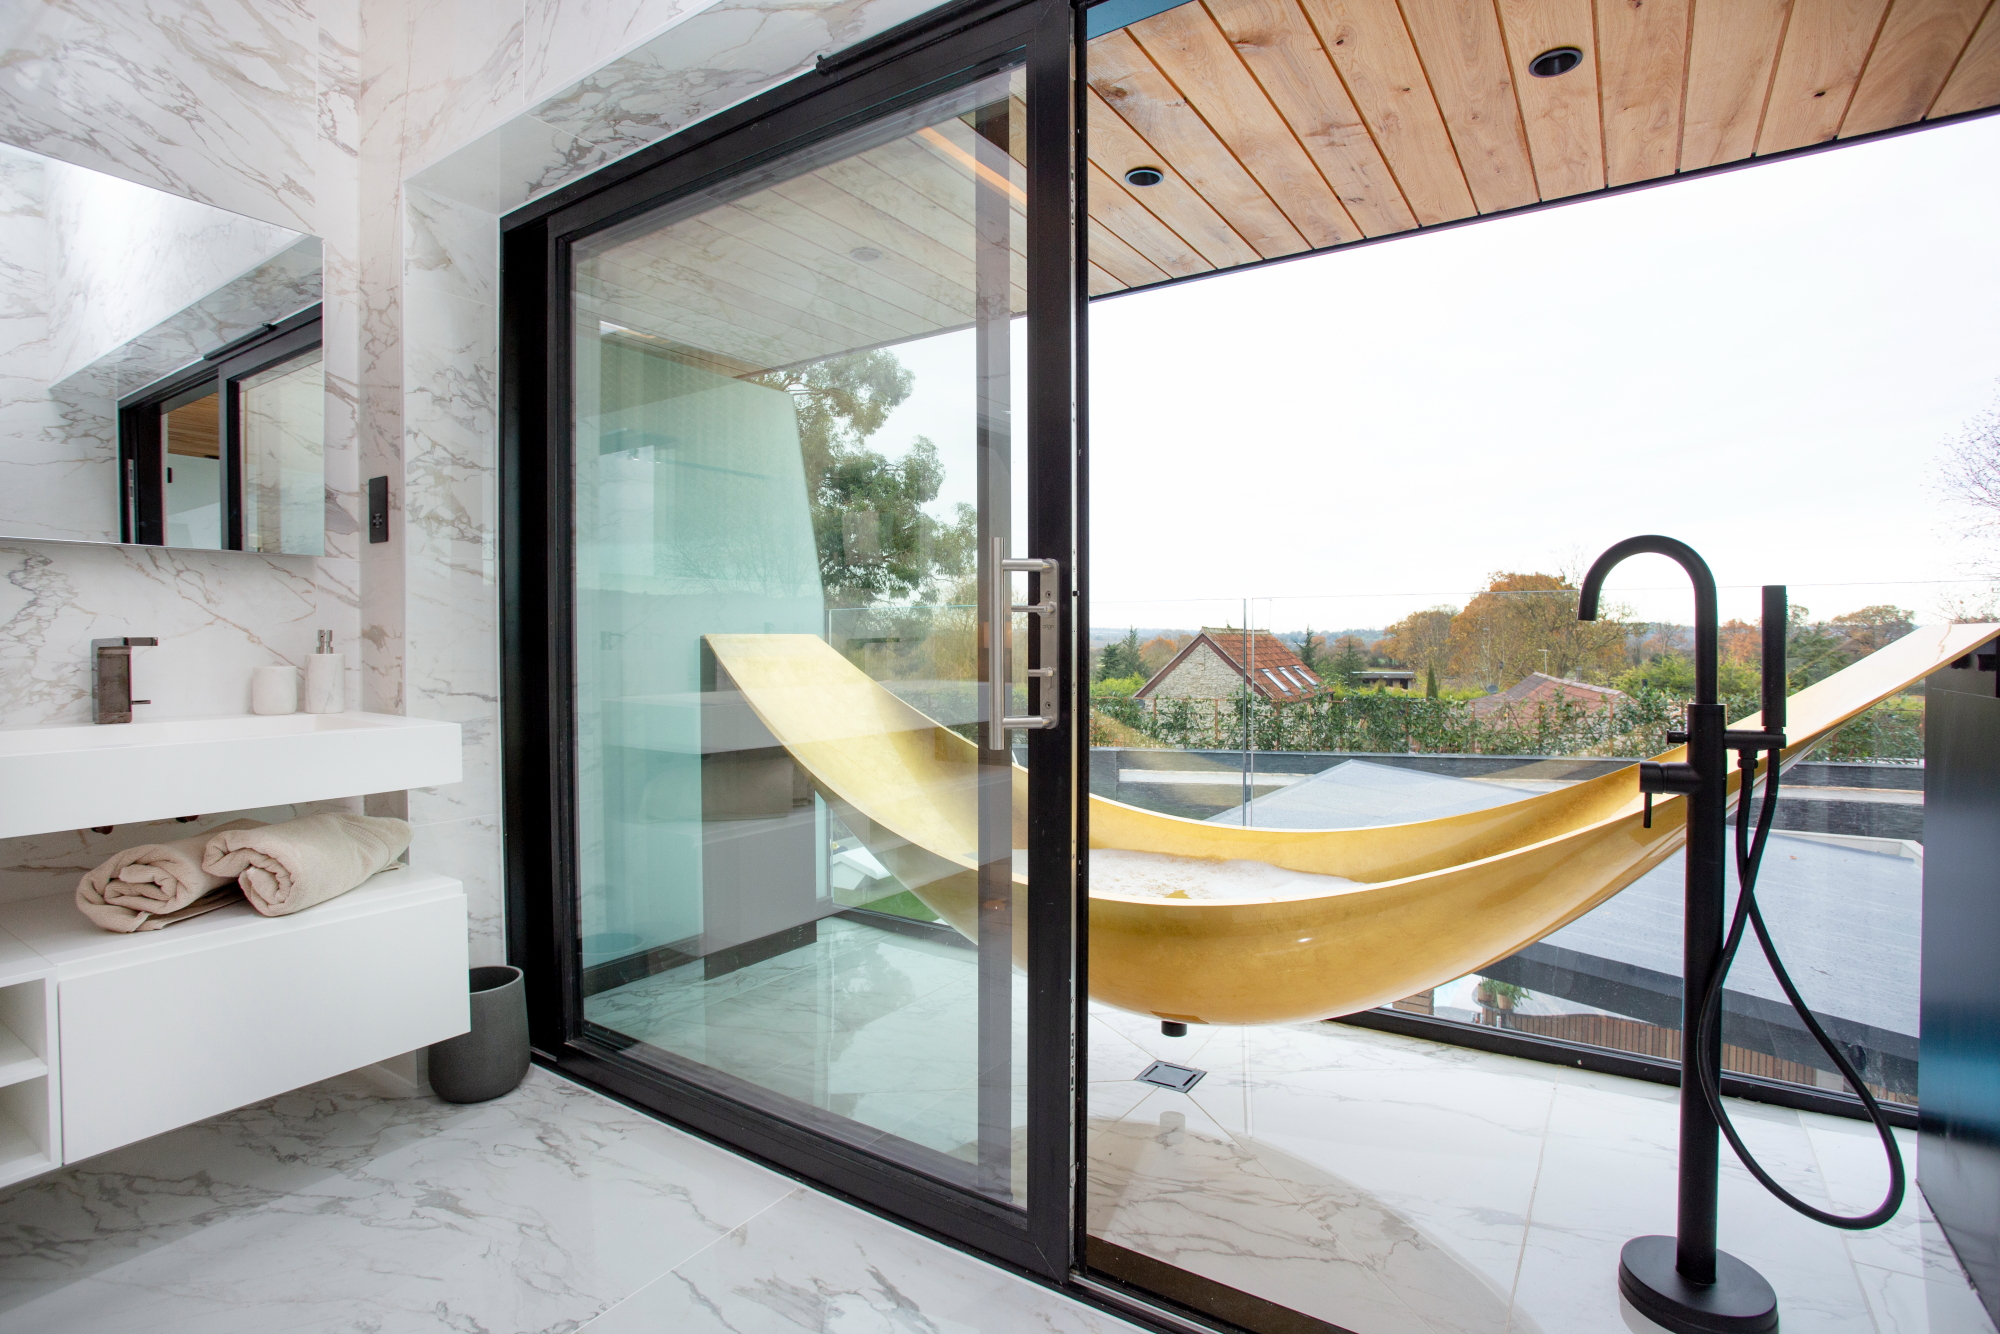 Hammock Bath through sliding doors on balcony